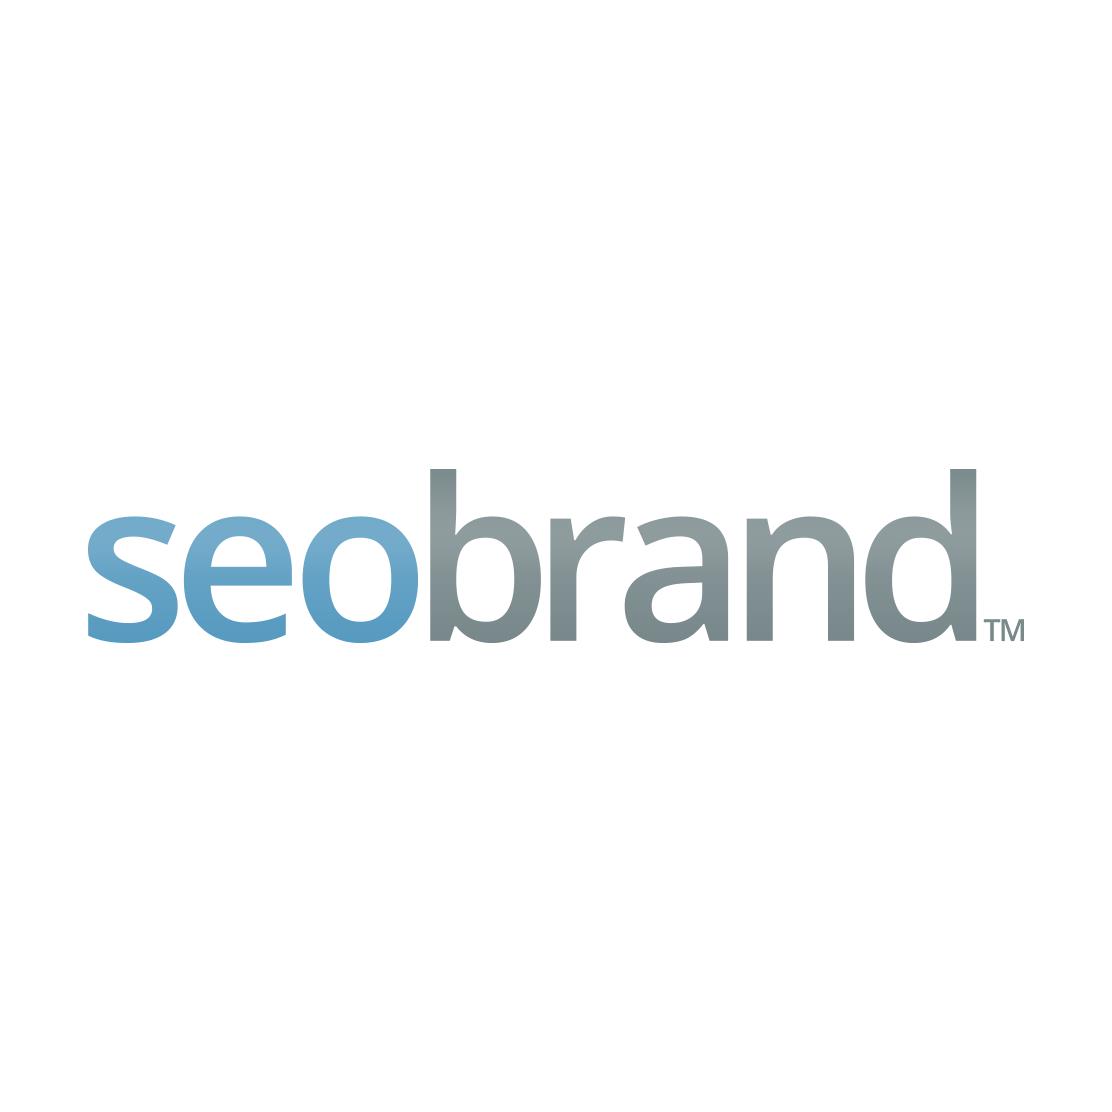 Best Reputation Management Agency Logo: SEO Brand